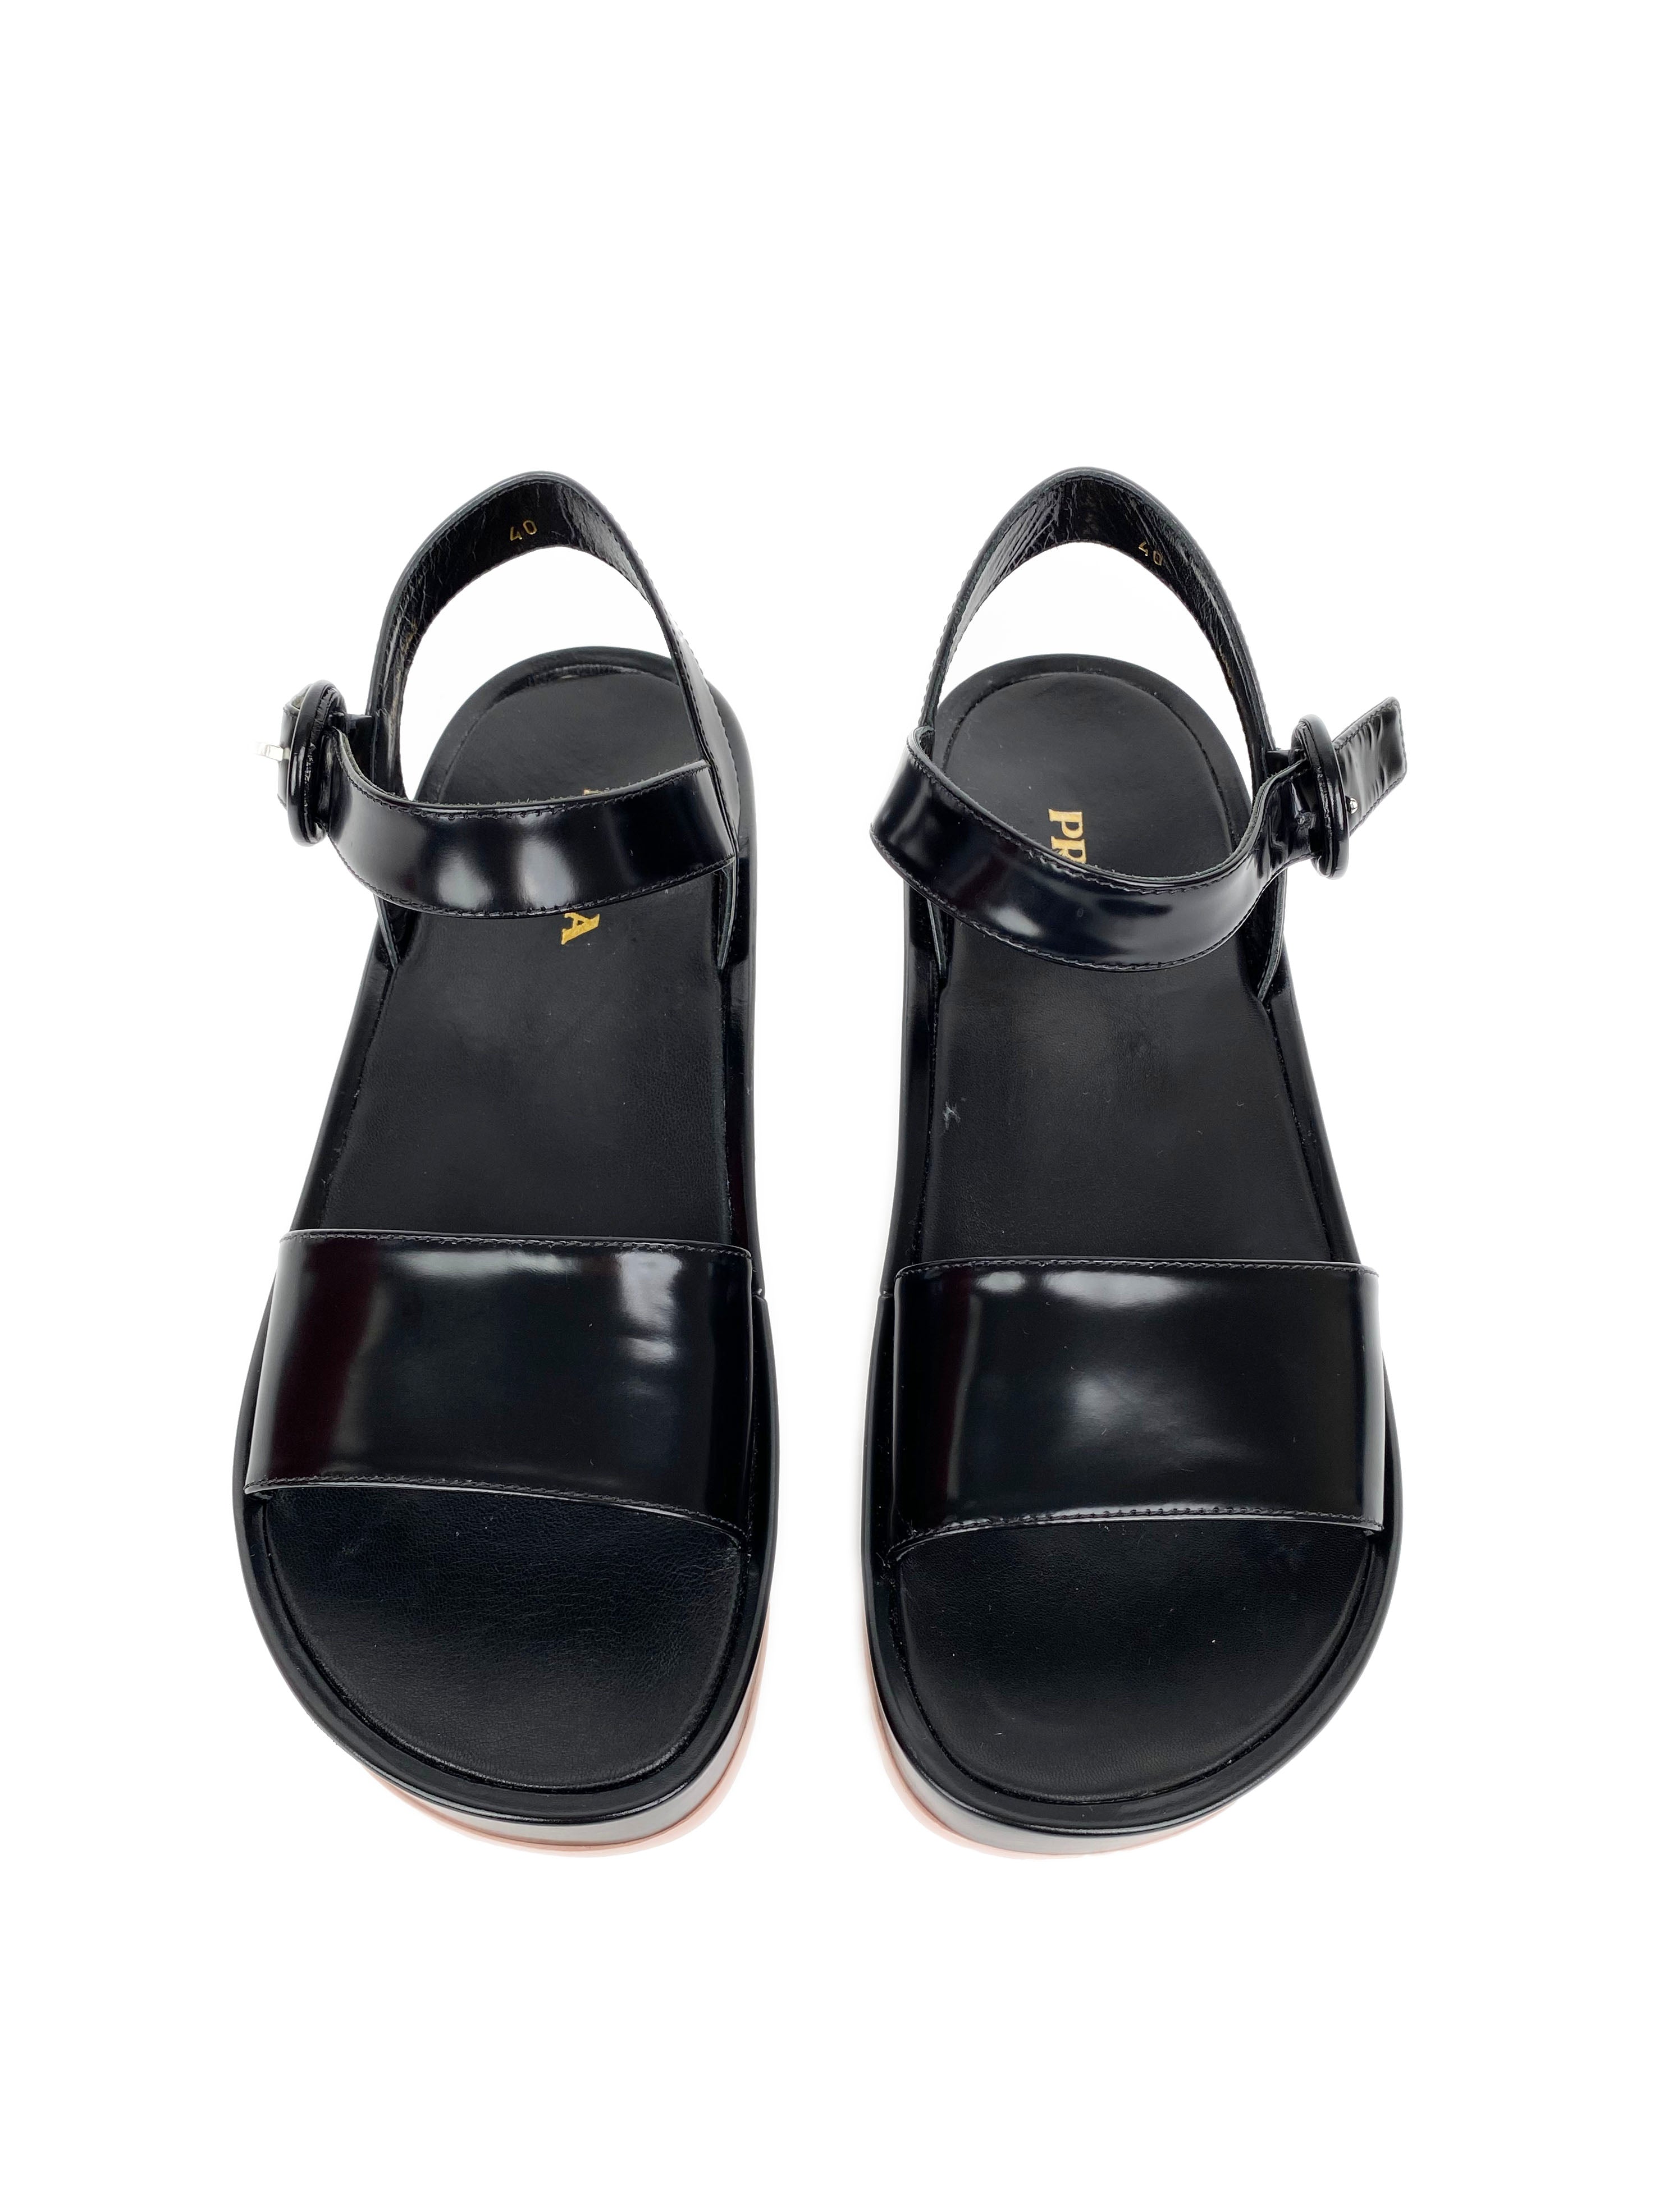 Prada Black Spazzolato Platform Sandals 40